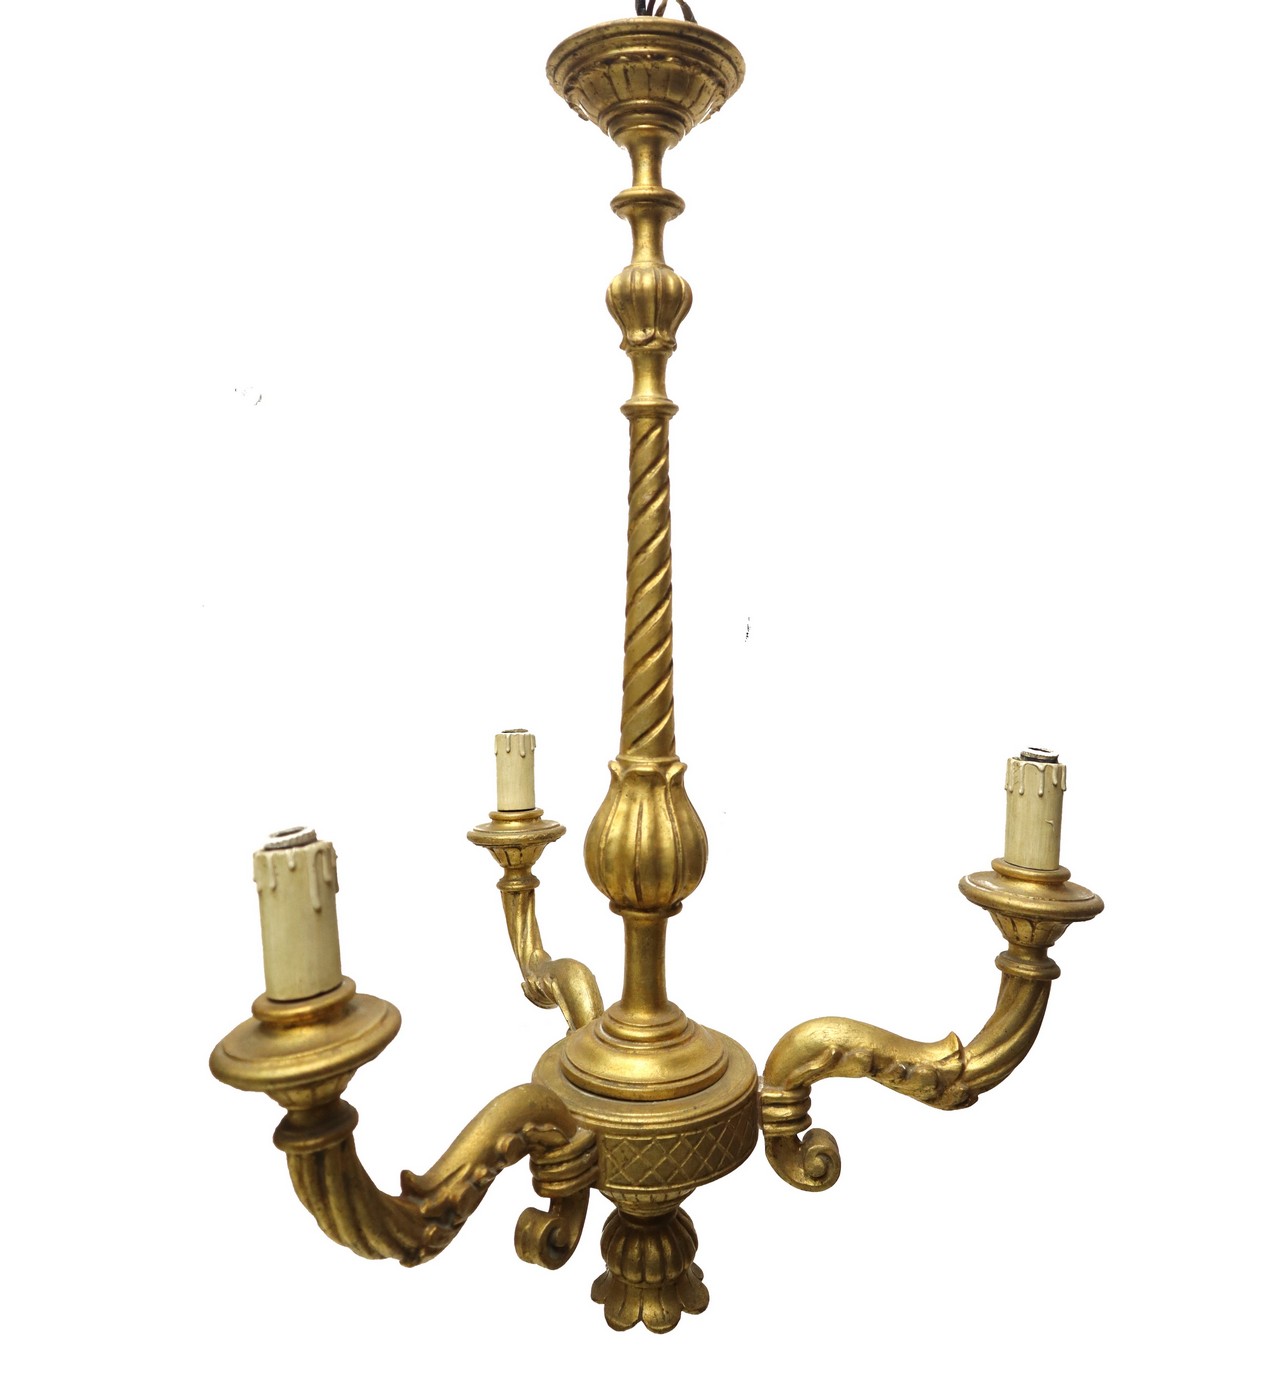 3-light chandelier in golden wood, 20th century - Image 2 of 4